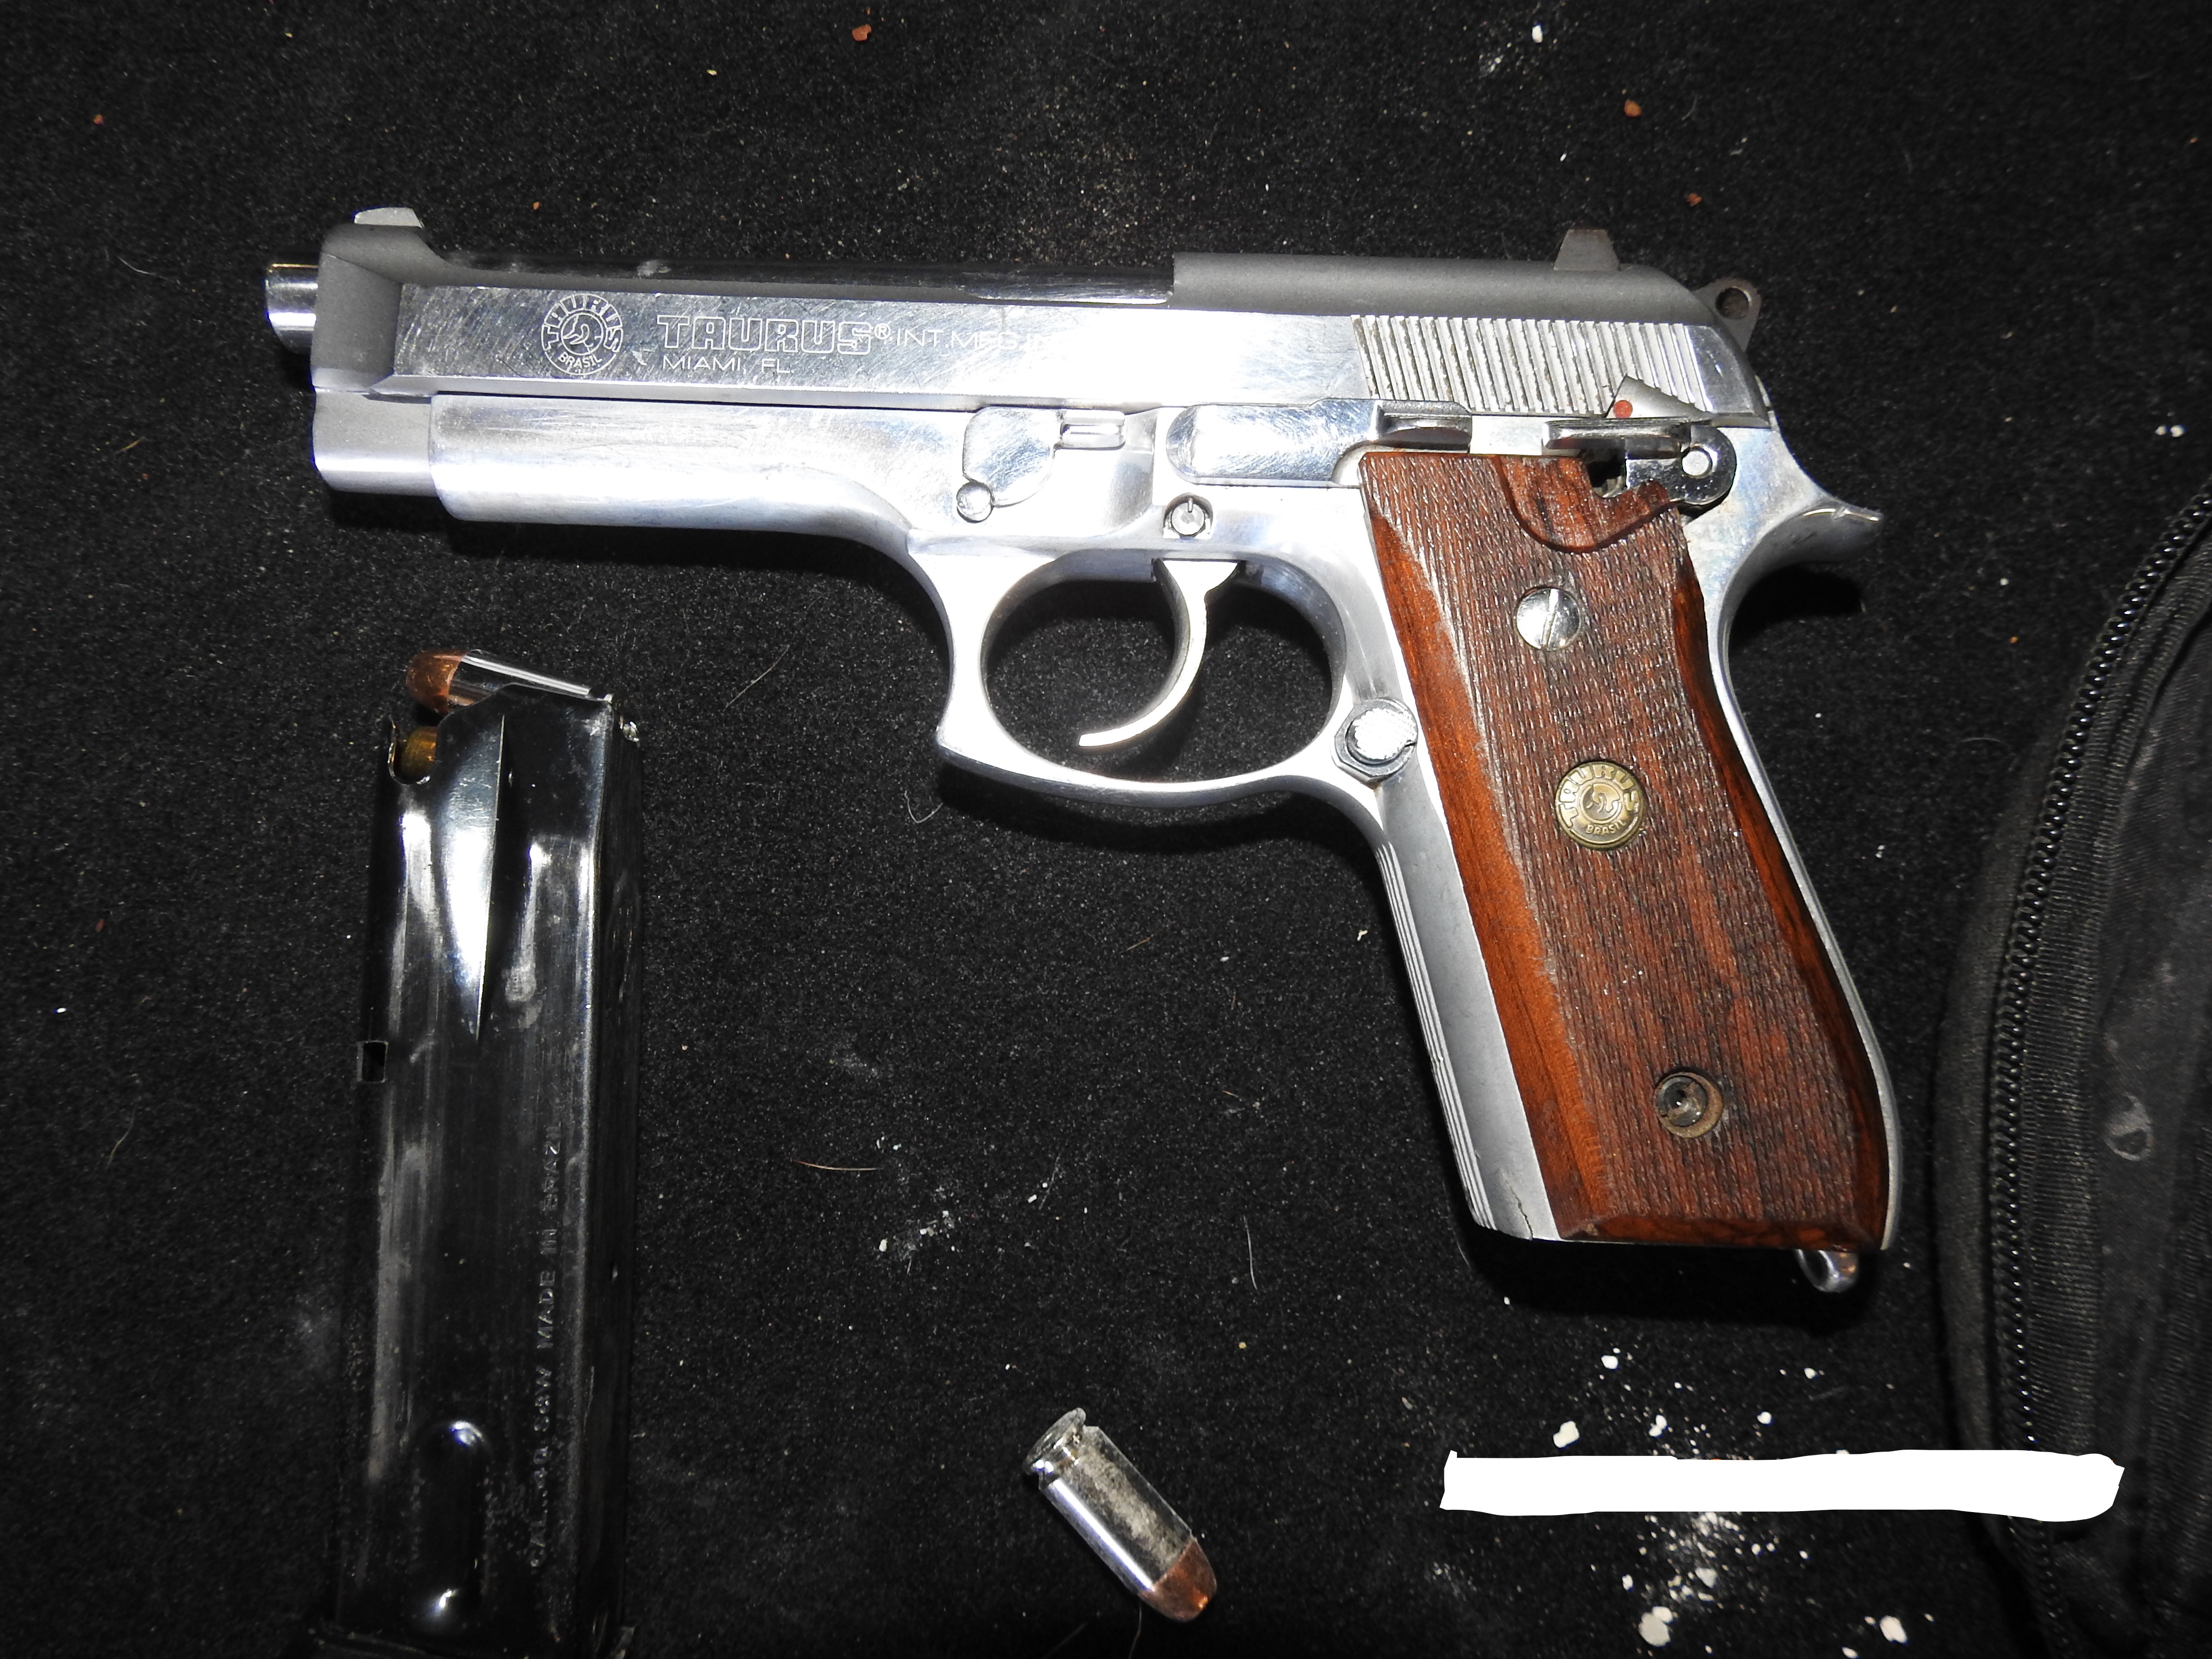 Police seize another loaded handgun amid drug trafficking investigation